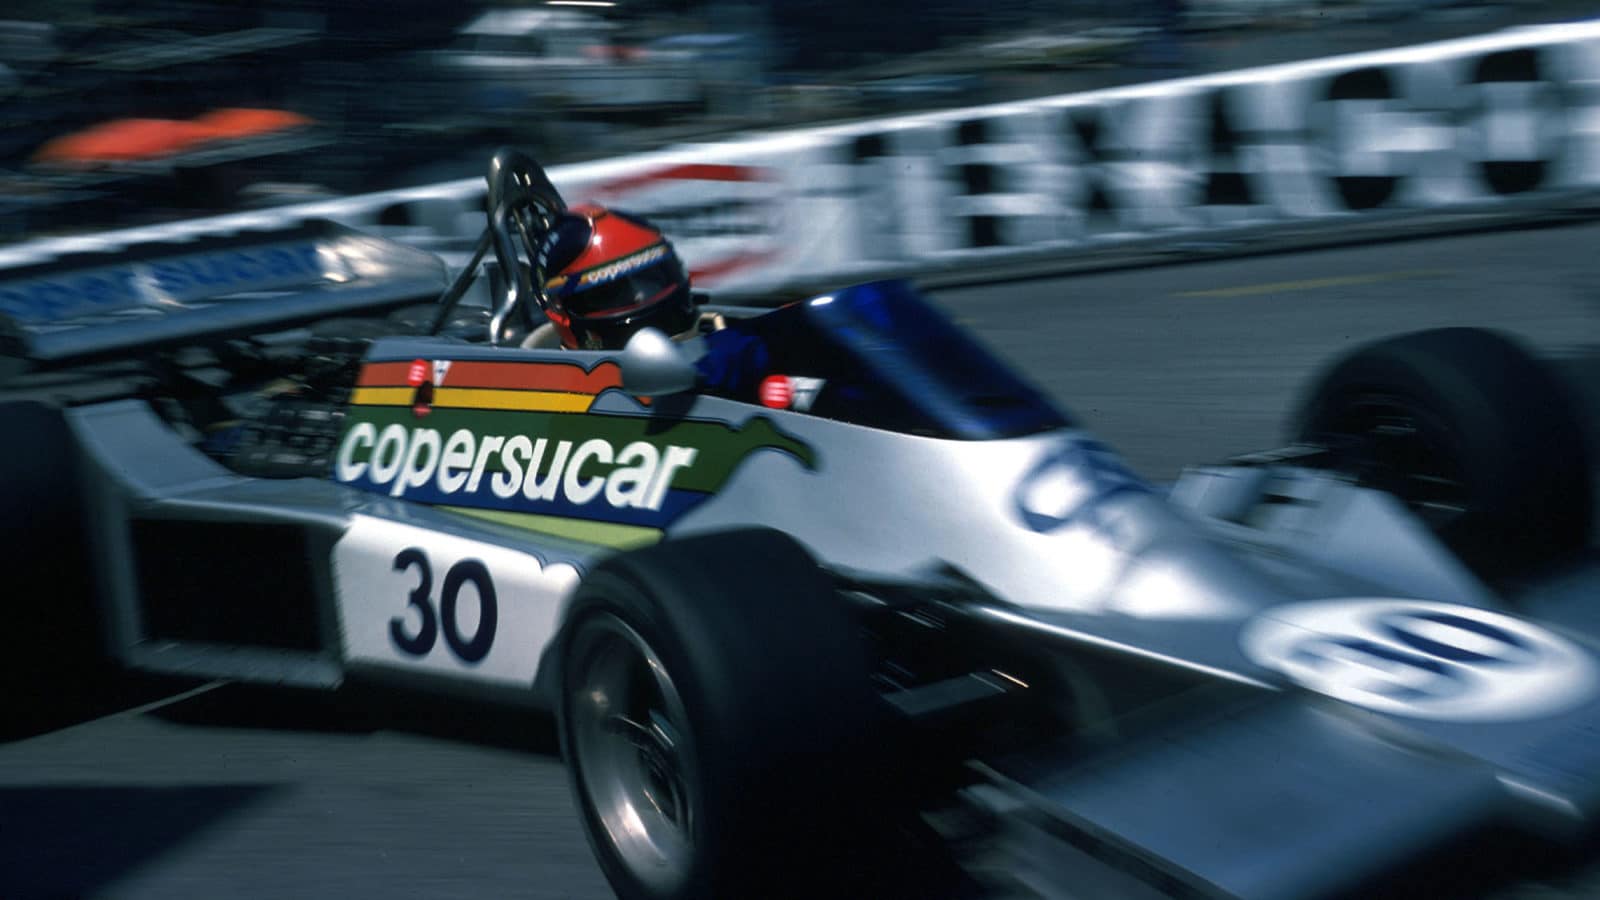 Formel 1, Grand Prix Monaco 1976, Monte Carlo, 30.05.1976 Emerson Fittipaldi, Fittipaldi-Ford FD04 www.hoch-zwei.net , copyright: HOCH ZWEI / Ronco (Photo by Hoch Zwei/Corbis via Getty Images)